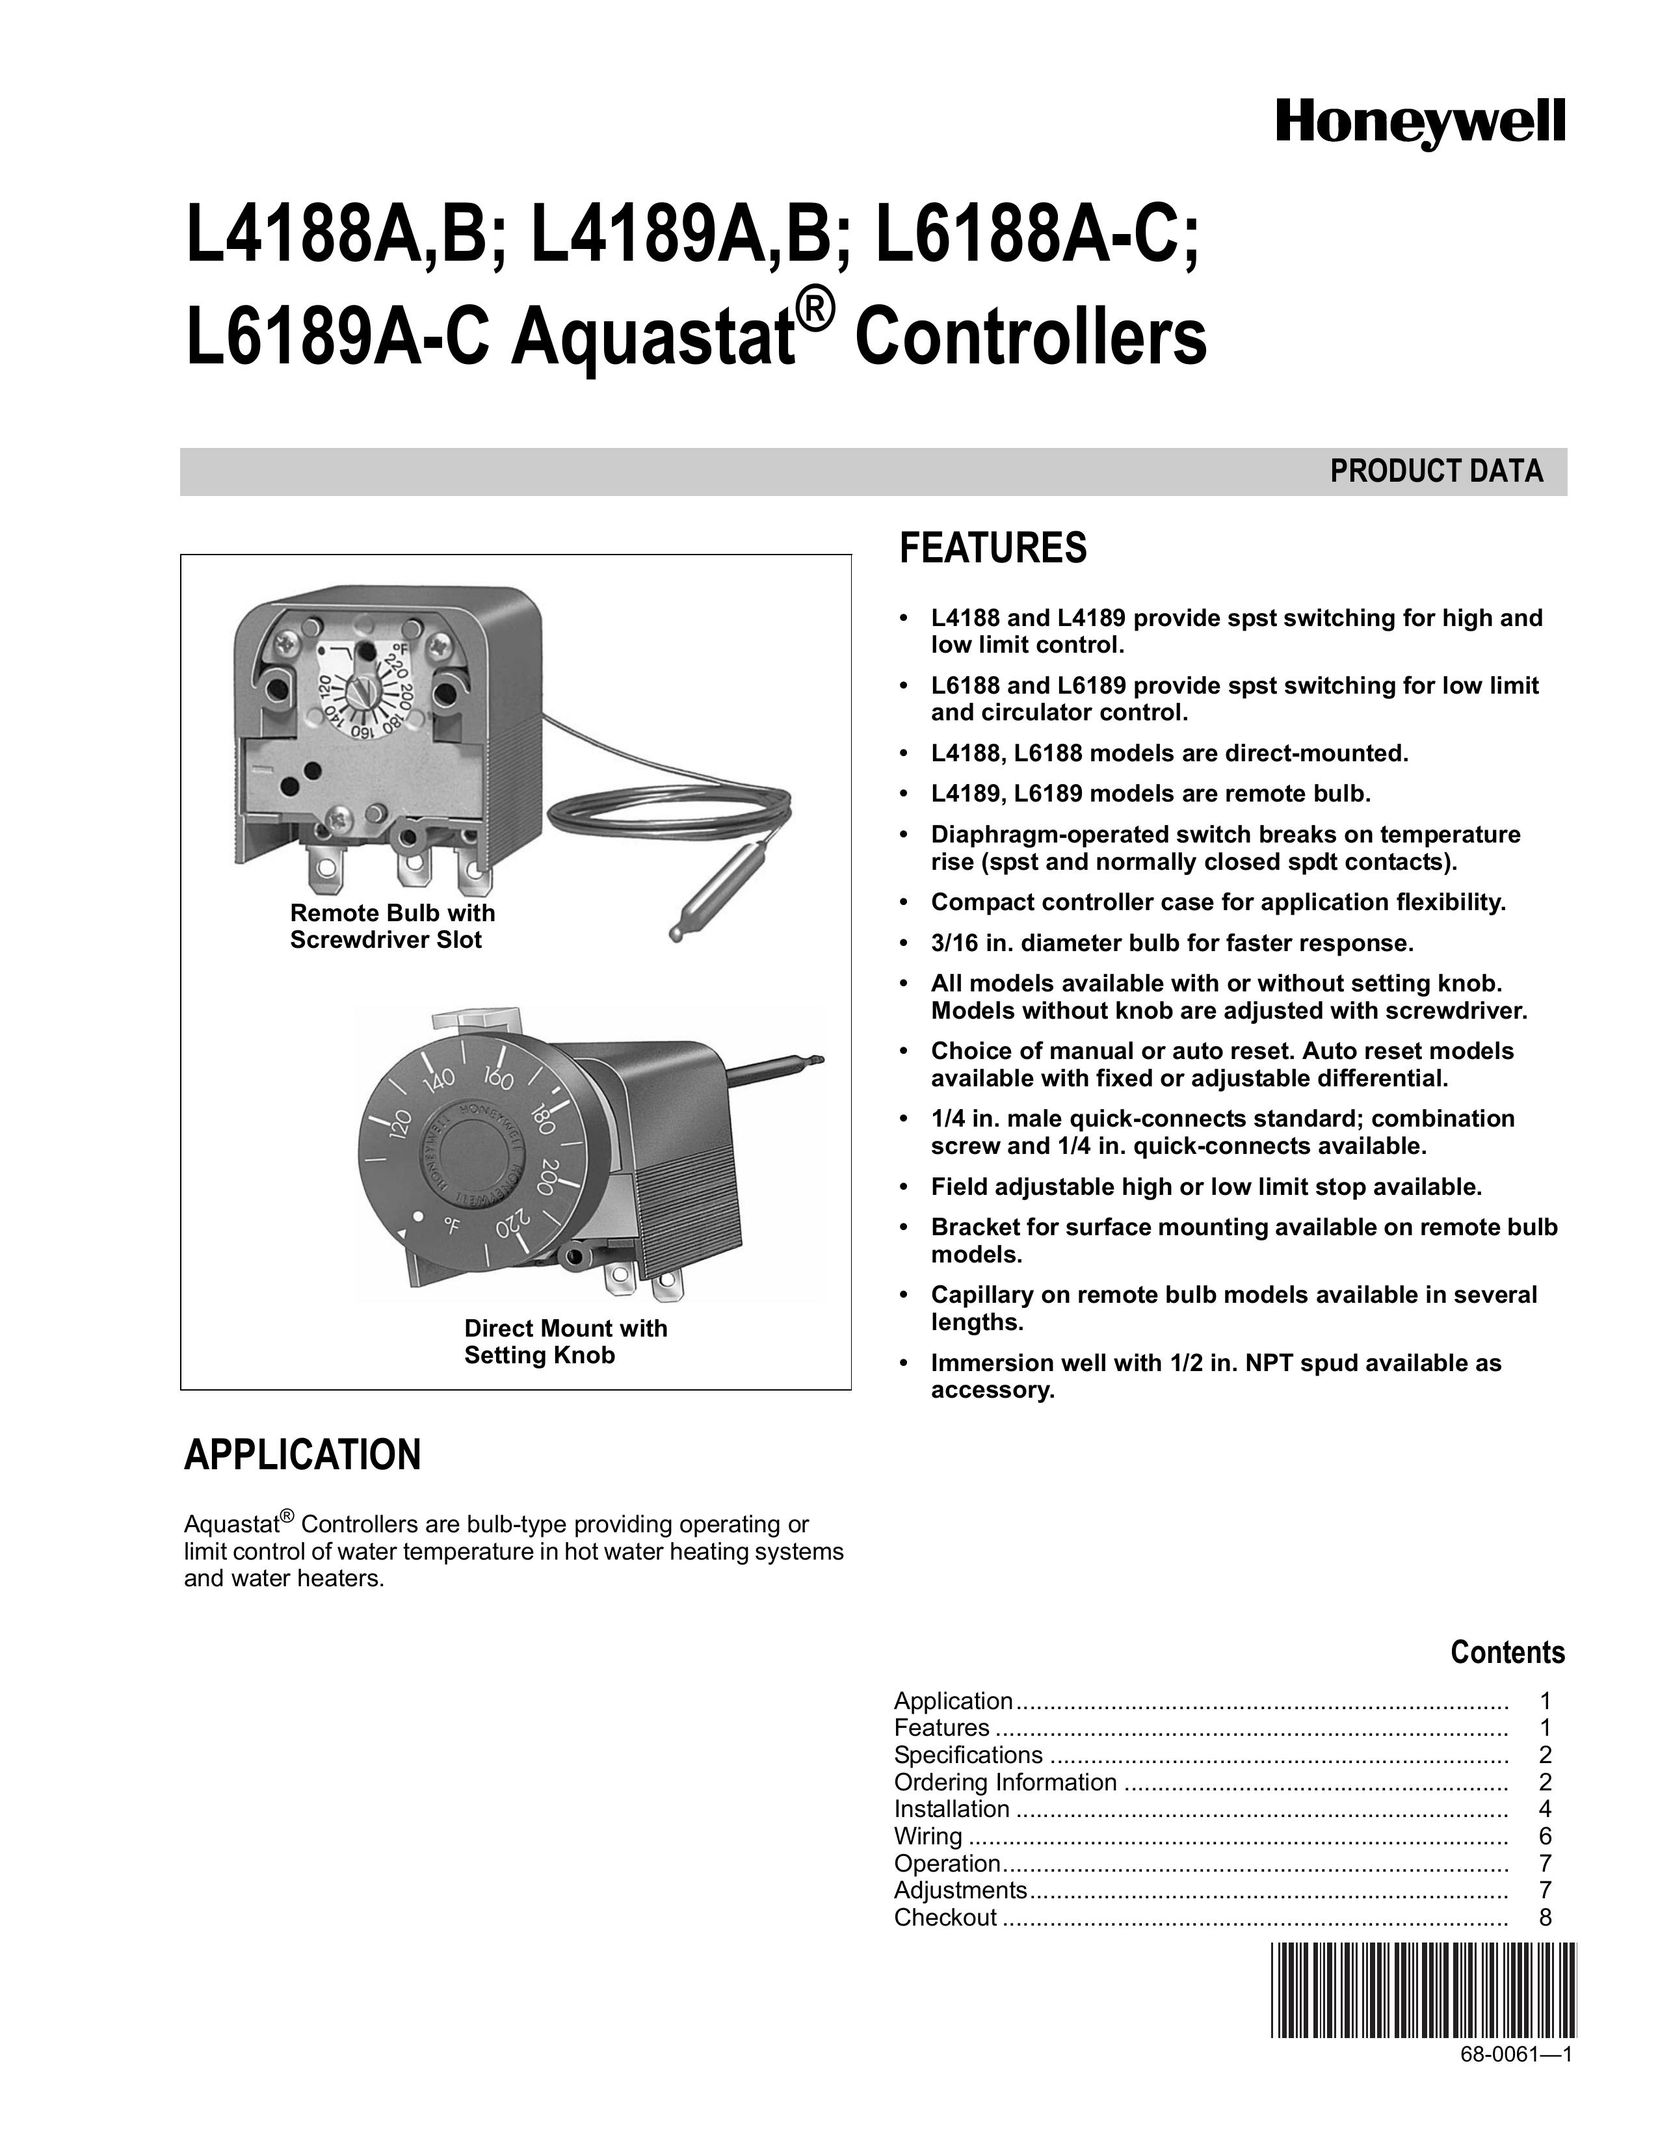 Honeywell L6188A-C Water Heater User Manual